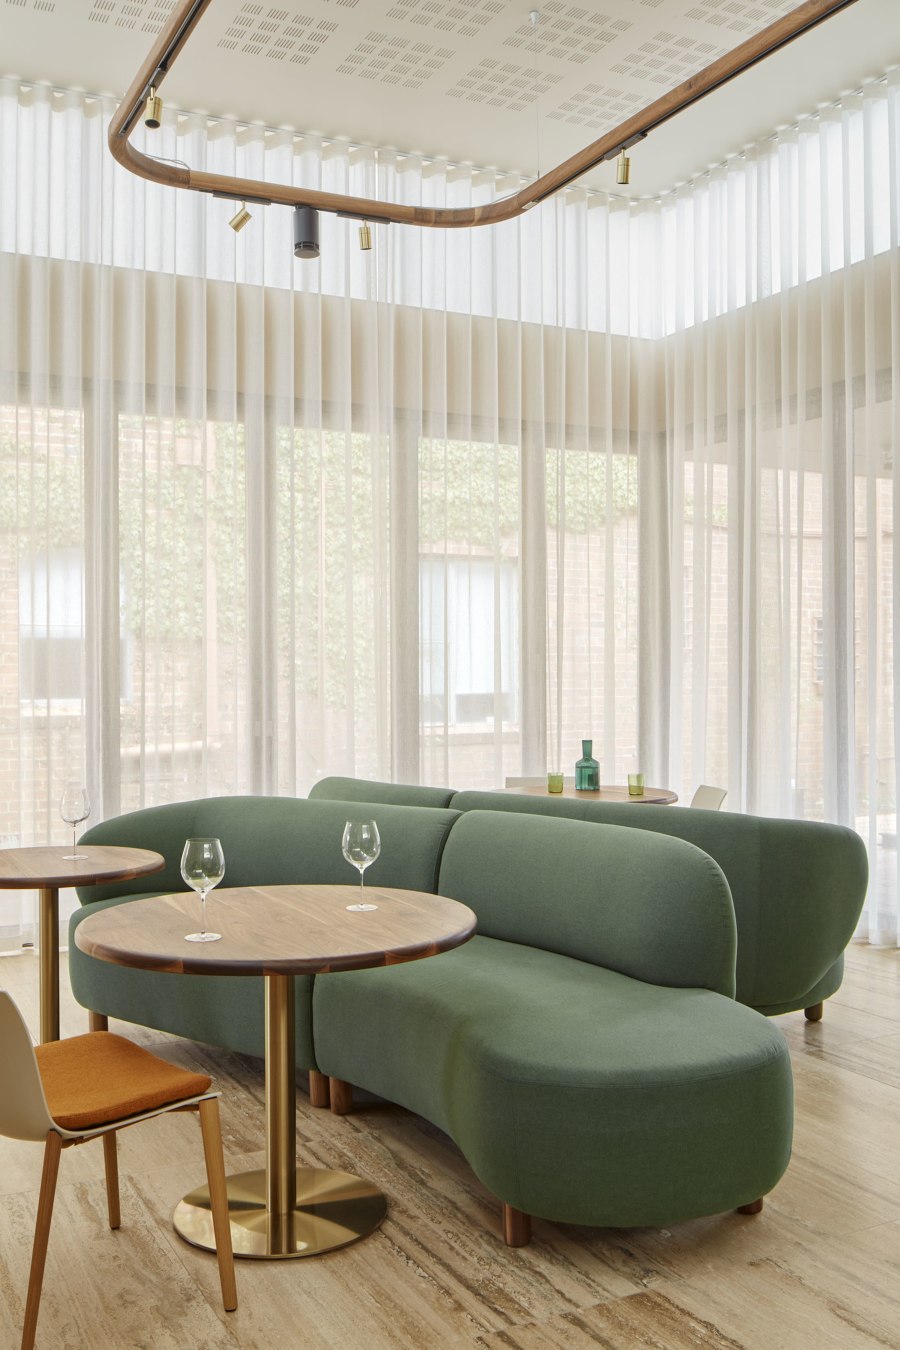 Hotel Vera Ballarat de Pitch Architecture + Design | Hoteles